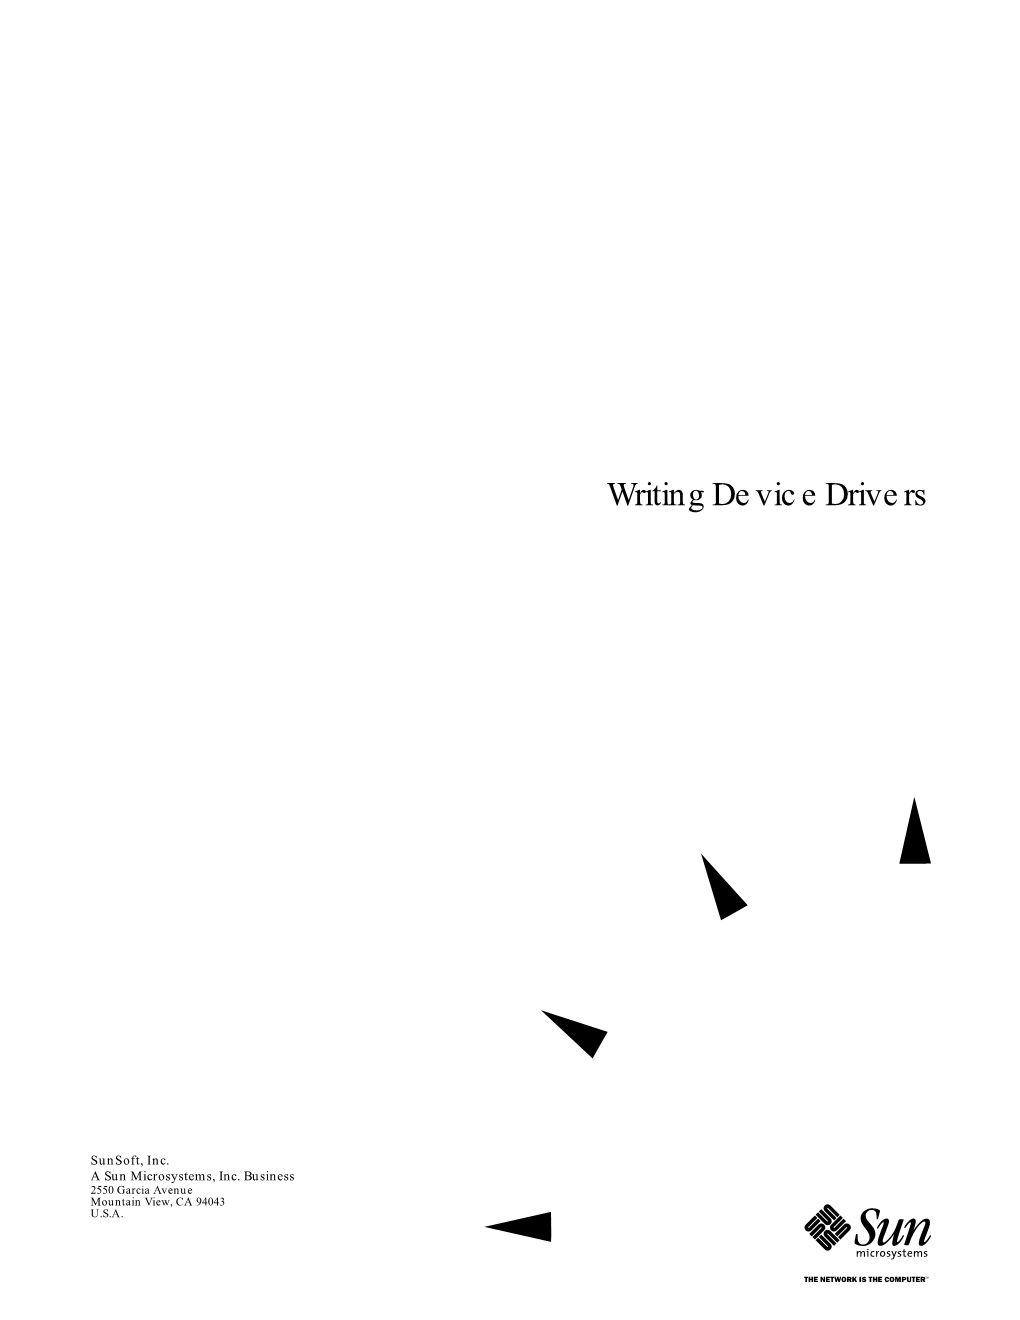 Writing Device Drivers